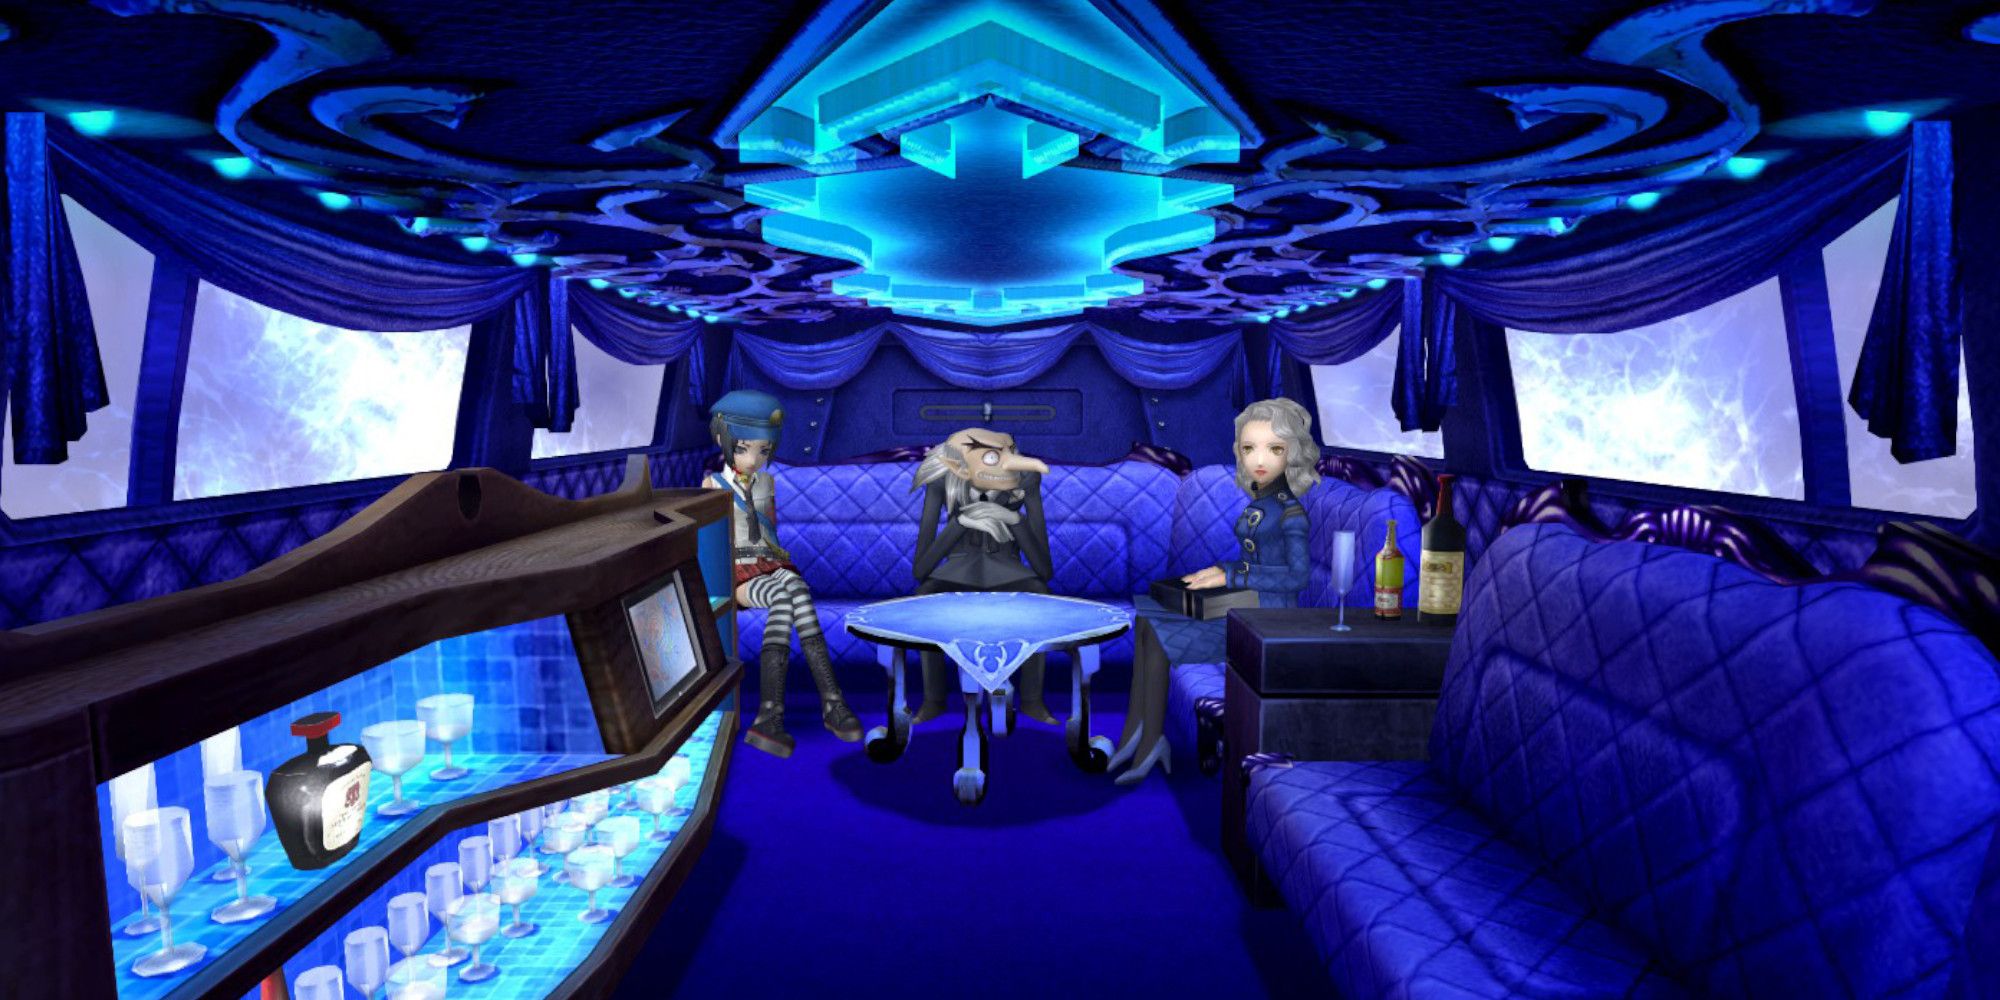 Marie, Igor, and Margaret in the Velvet Room of Persona 4 Golden